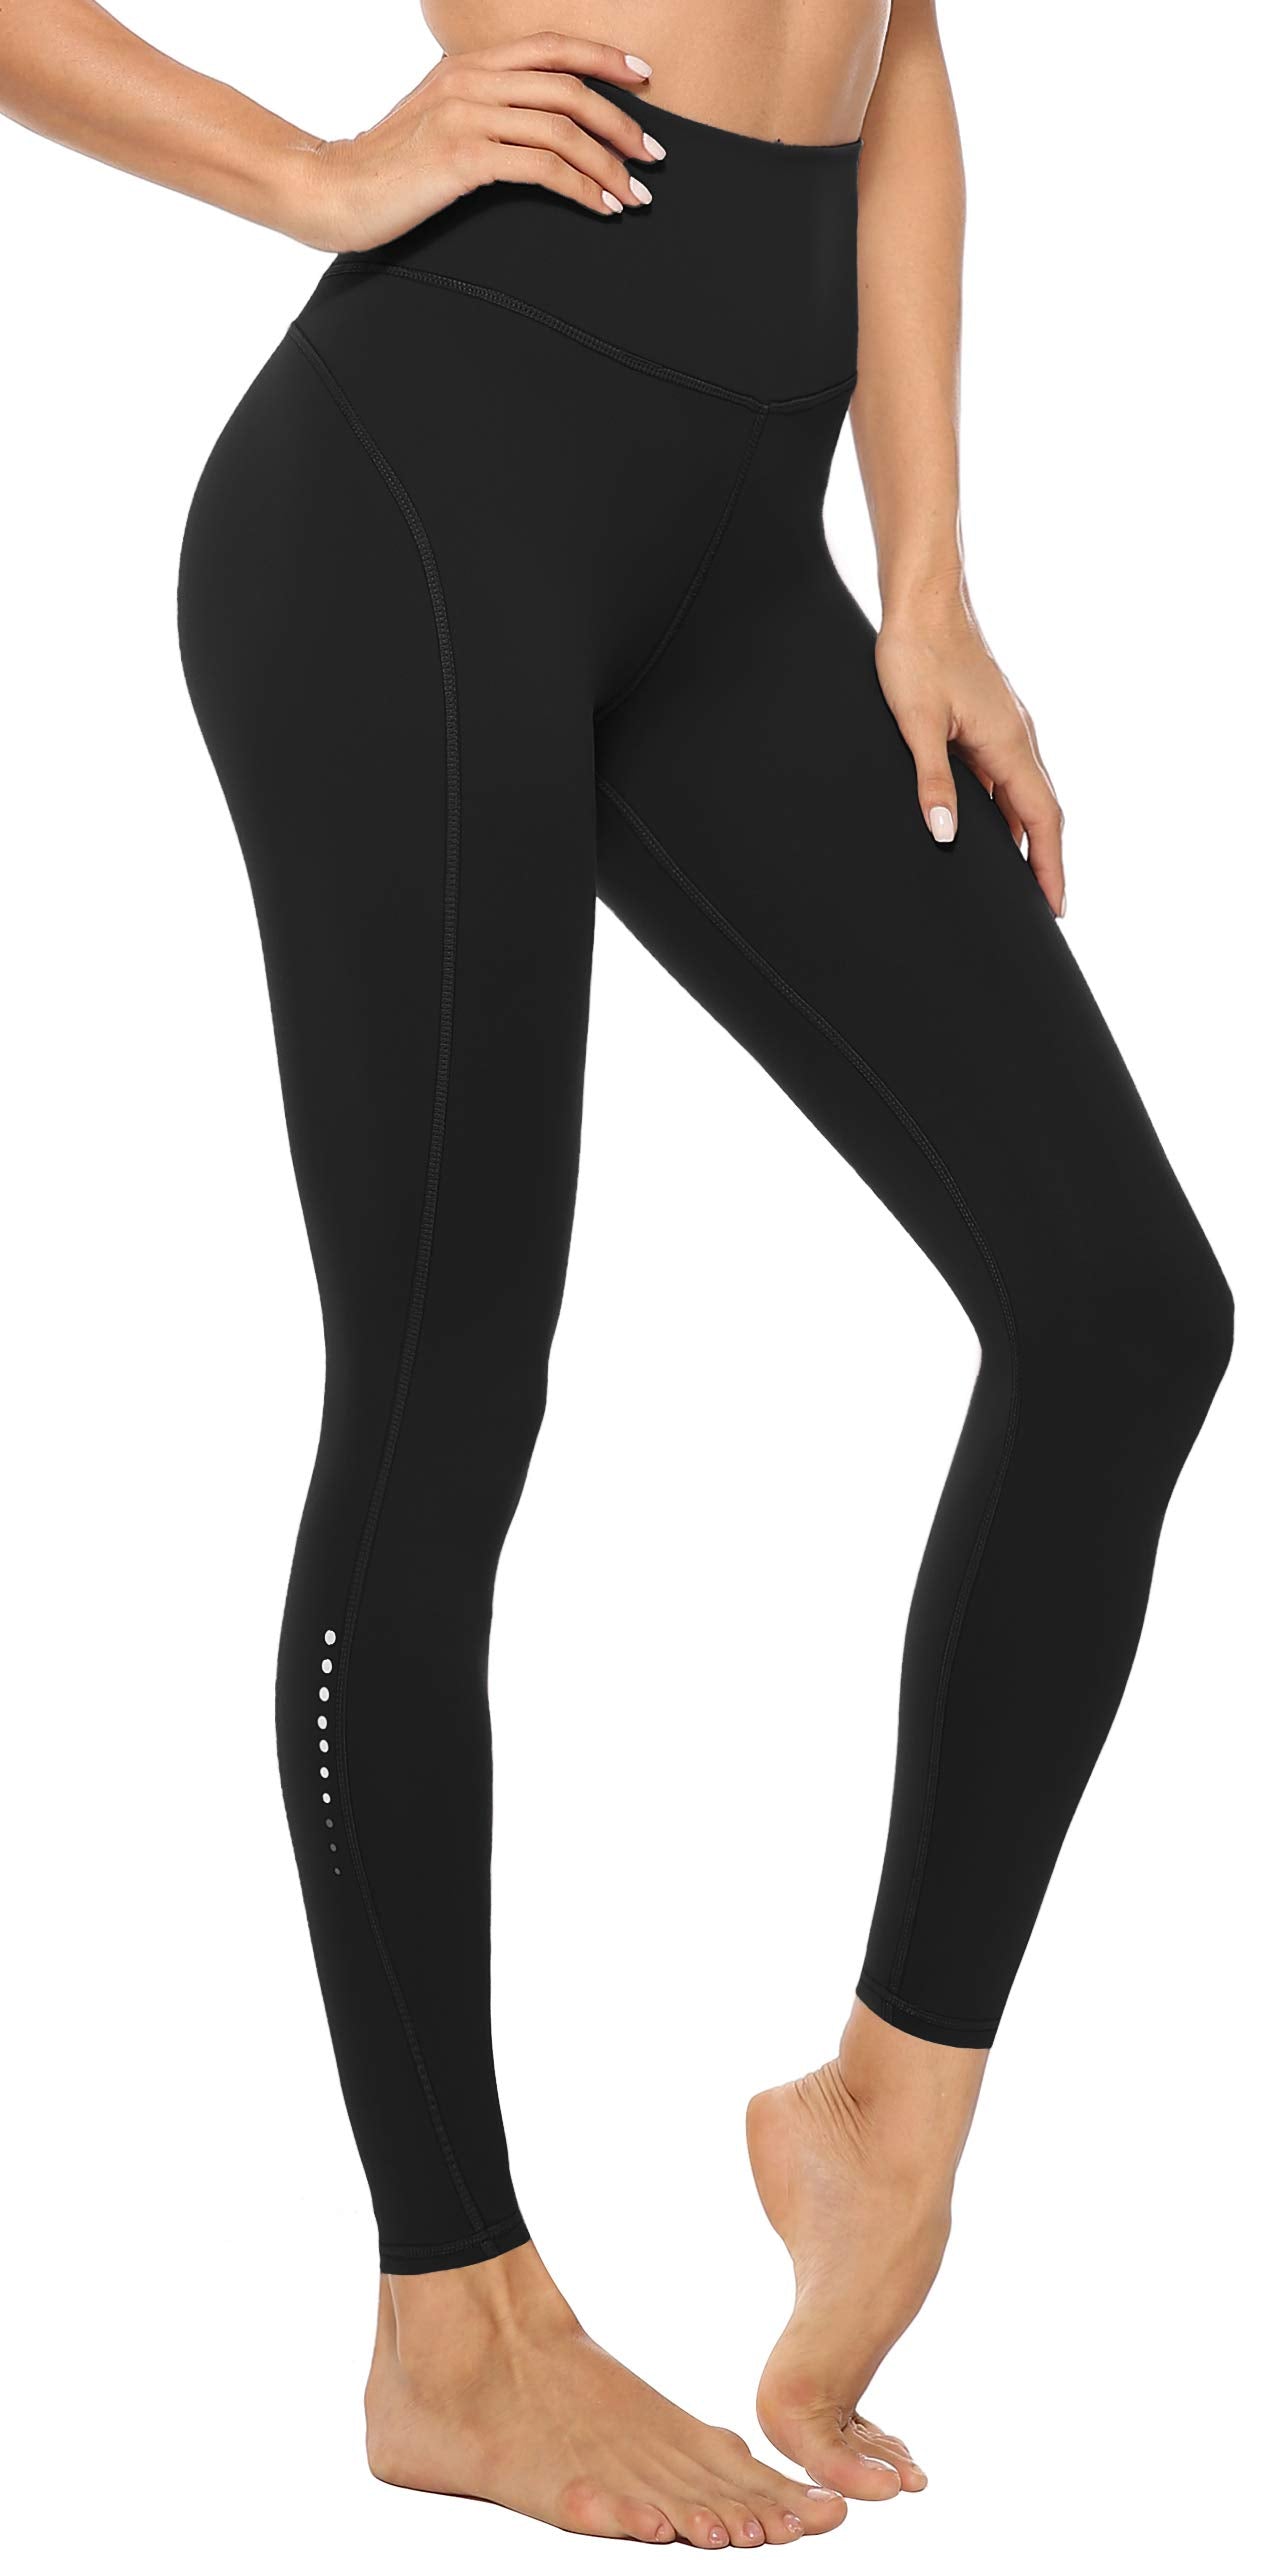 JOYSPELS Yoga Pants for Women Printed Workout Exercise Leggings